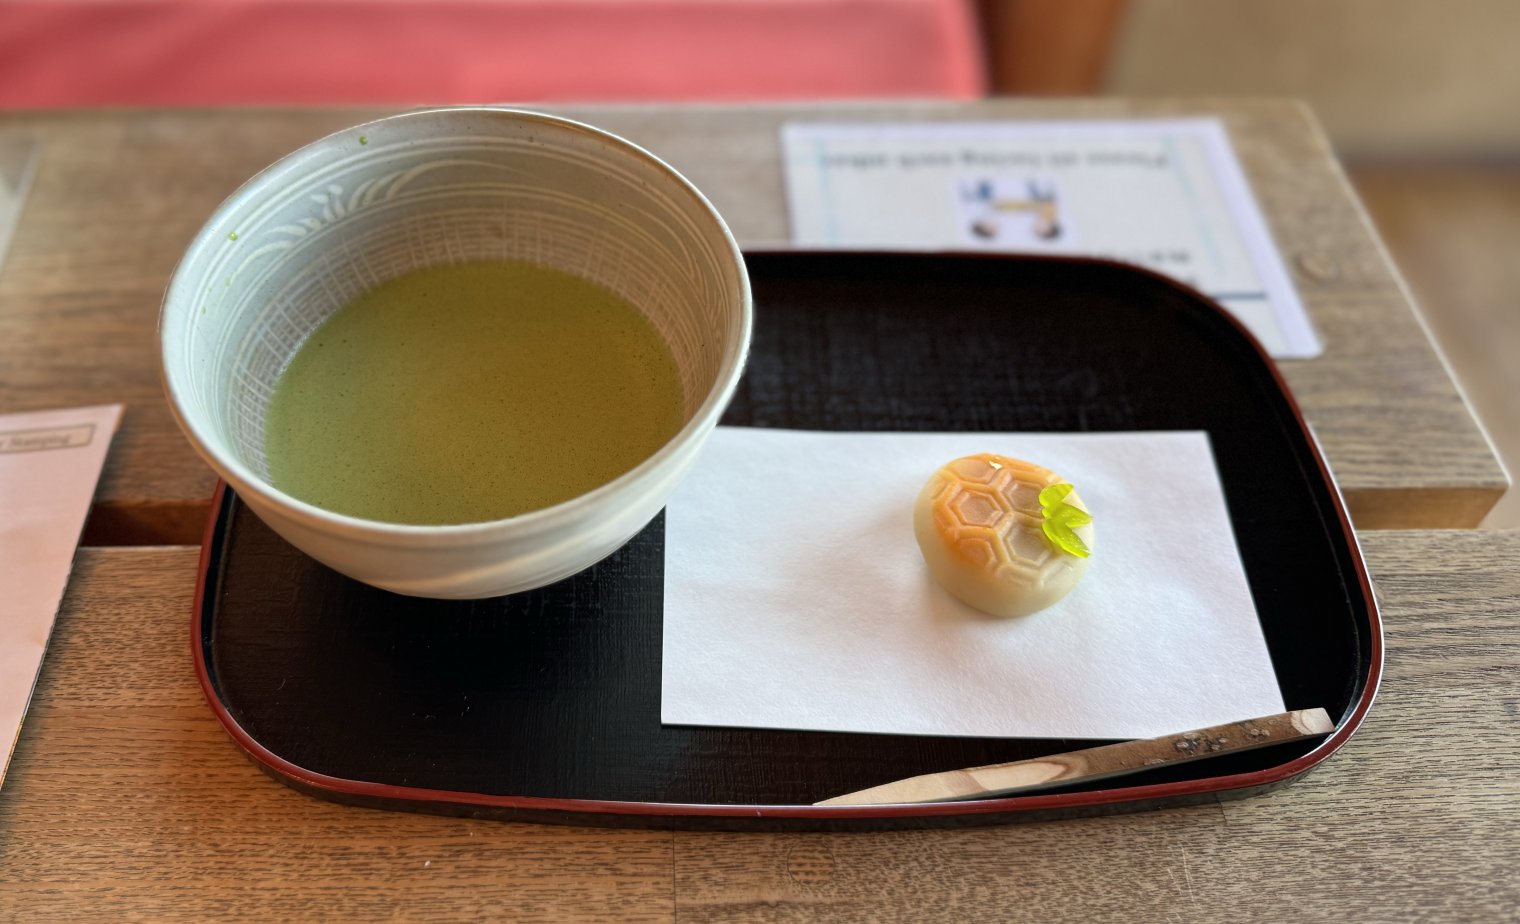 Bowl of matcha tea with mochi treat beside it